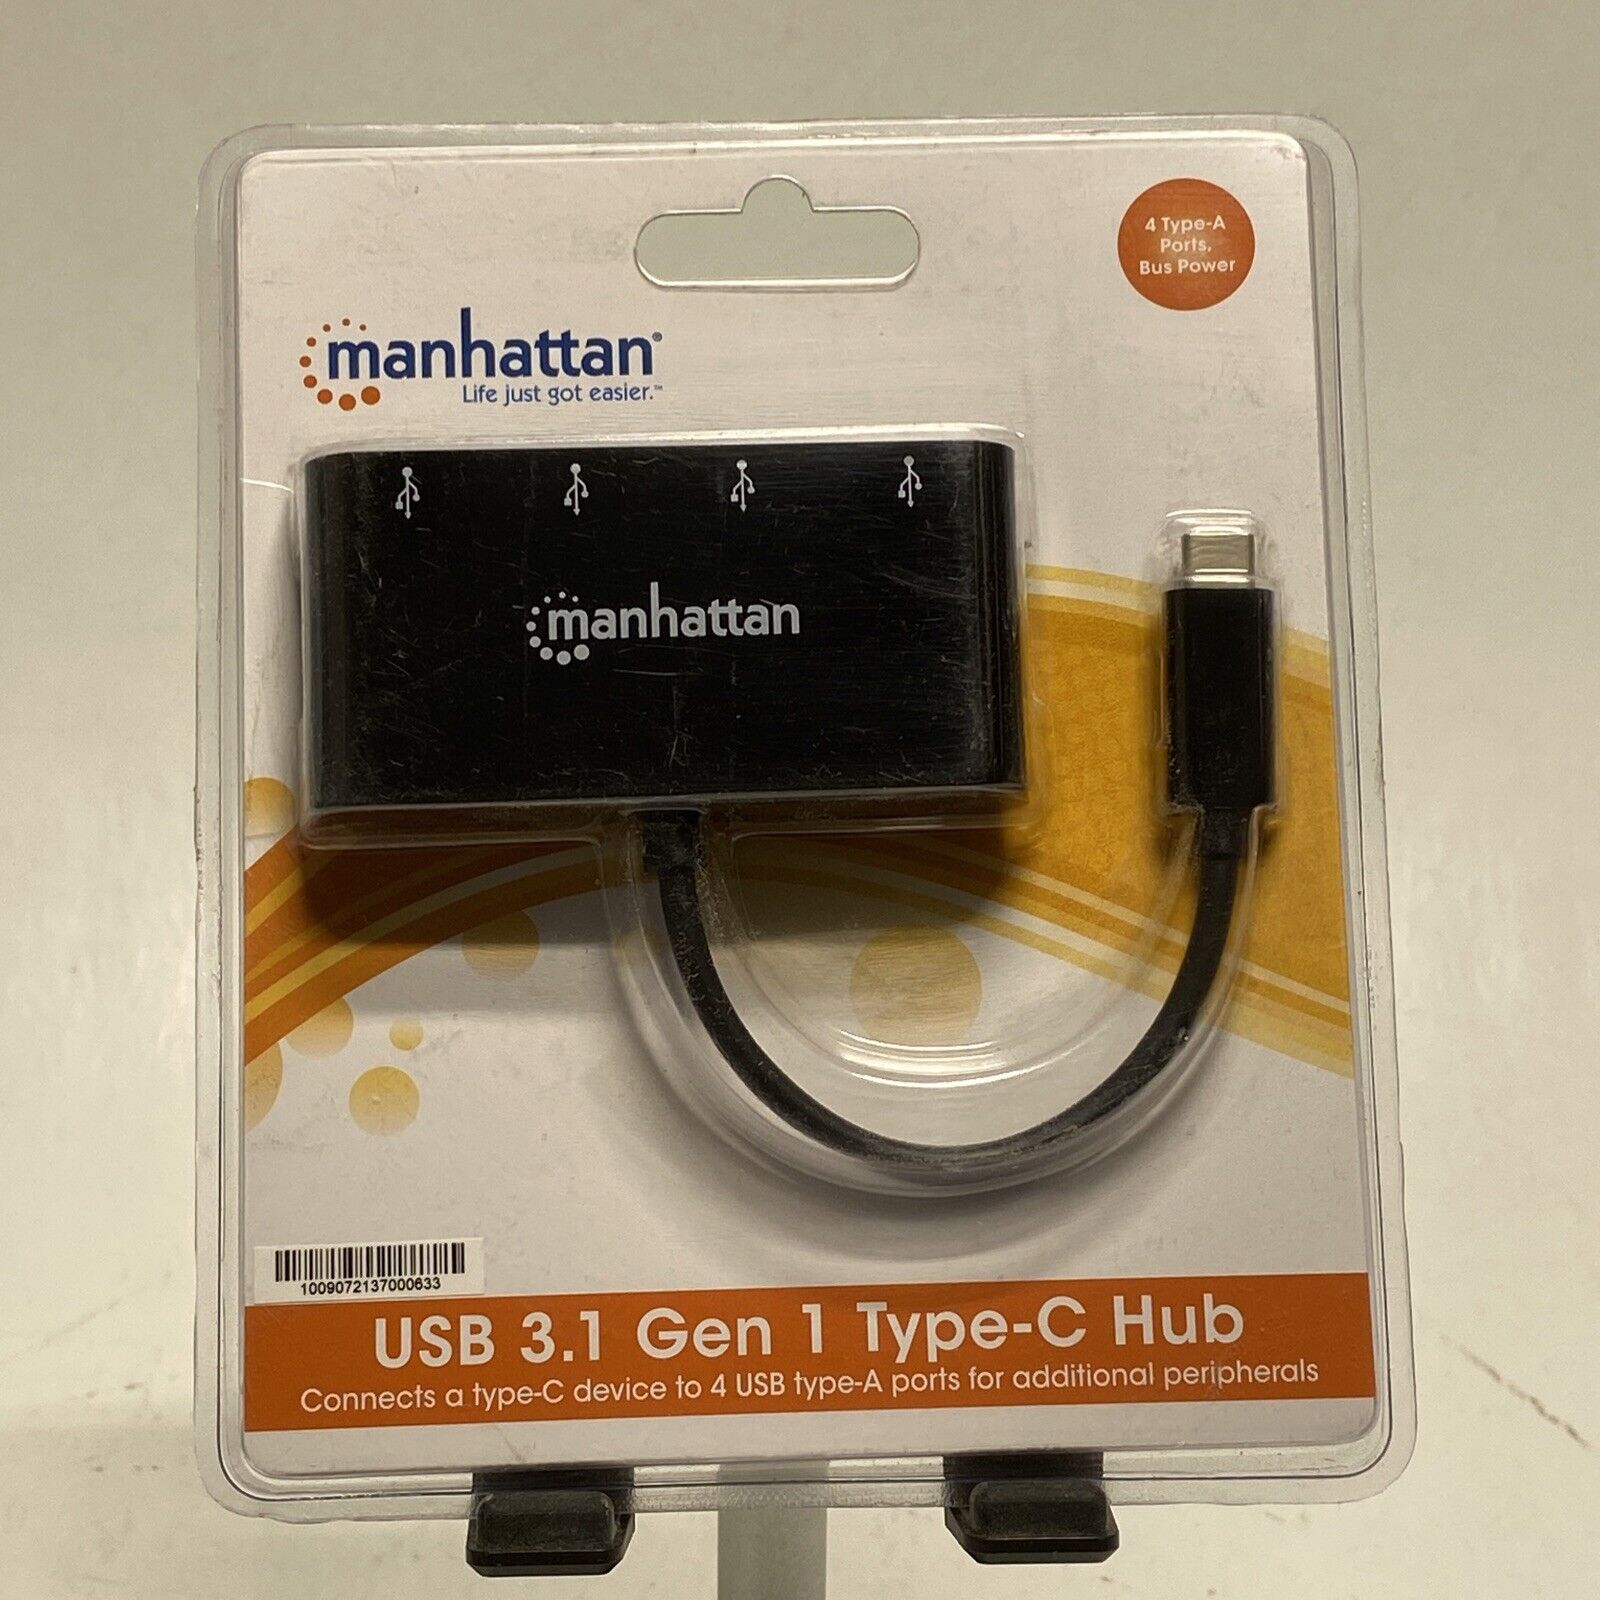 Manhattan USB 3.1 Gen 1 Type-C Hub 4 Type-A USB ports ICI162746